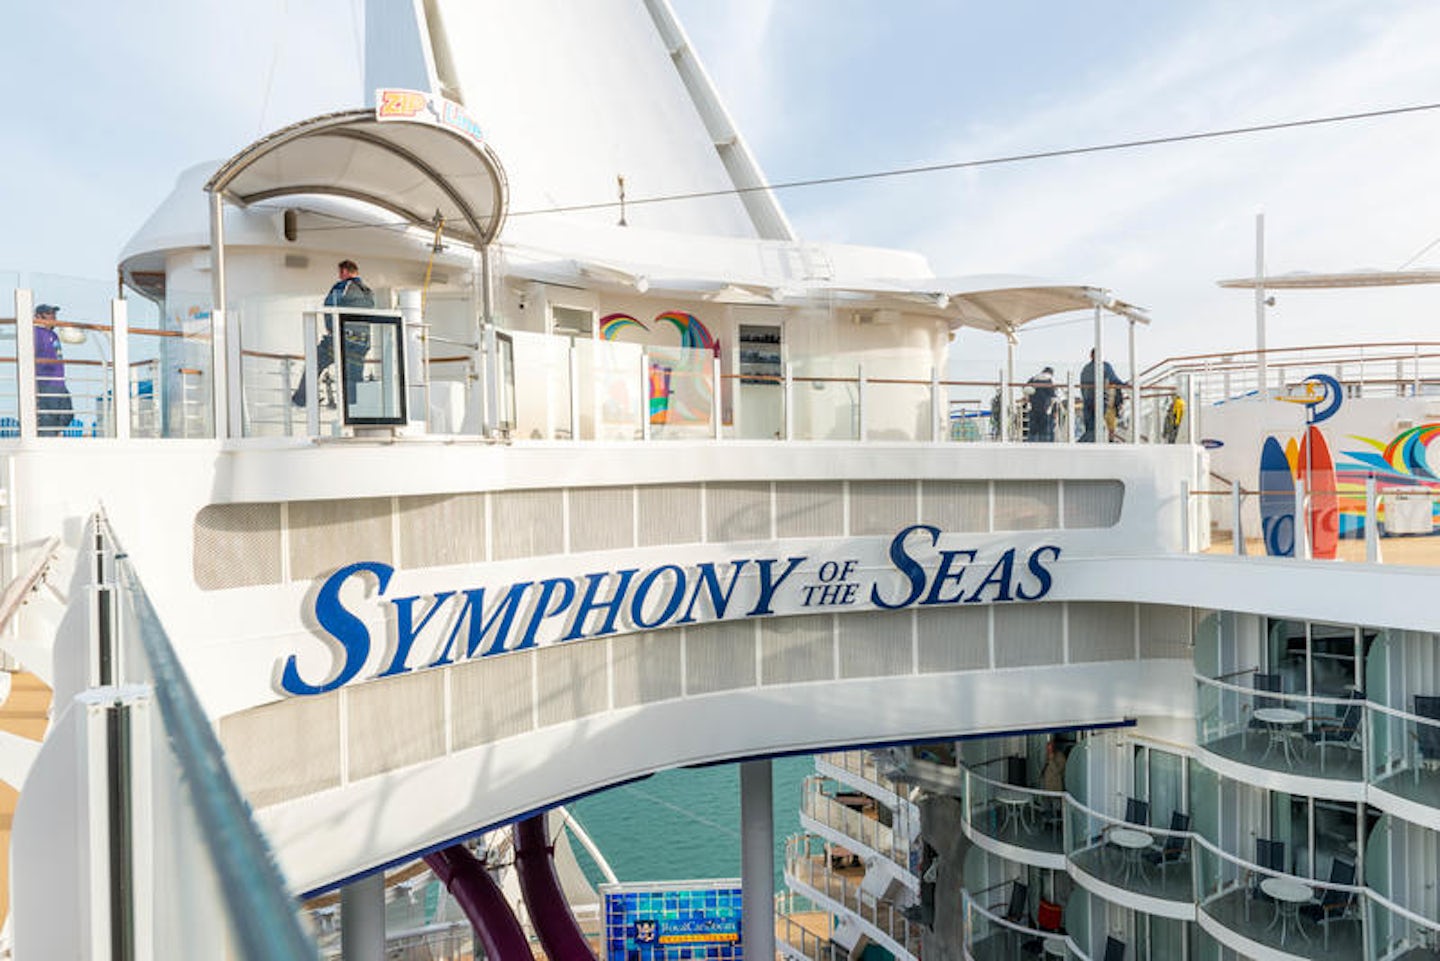 Zipline on Symphony of the Seas